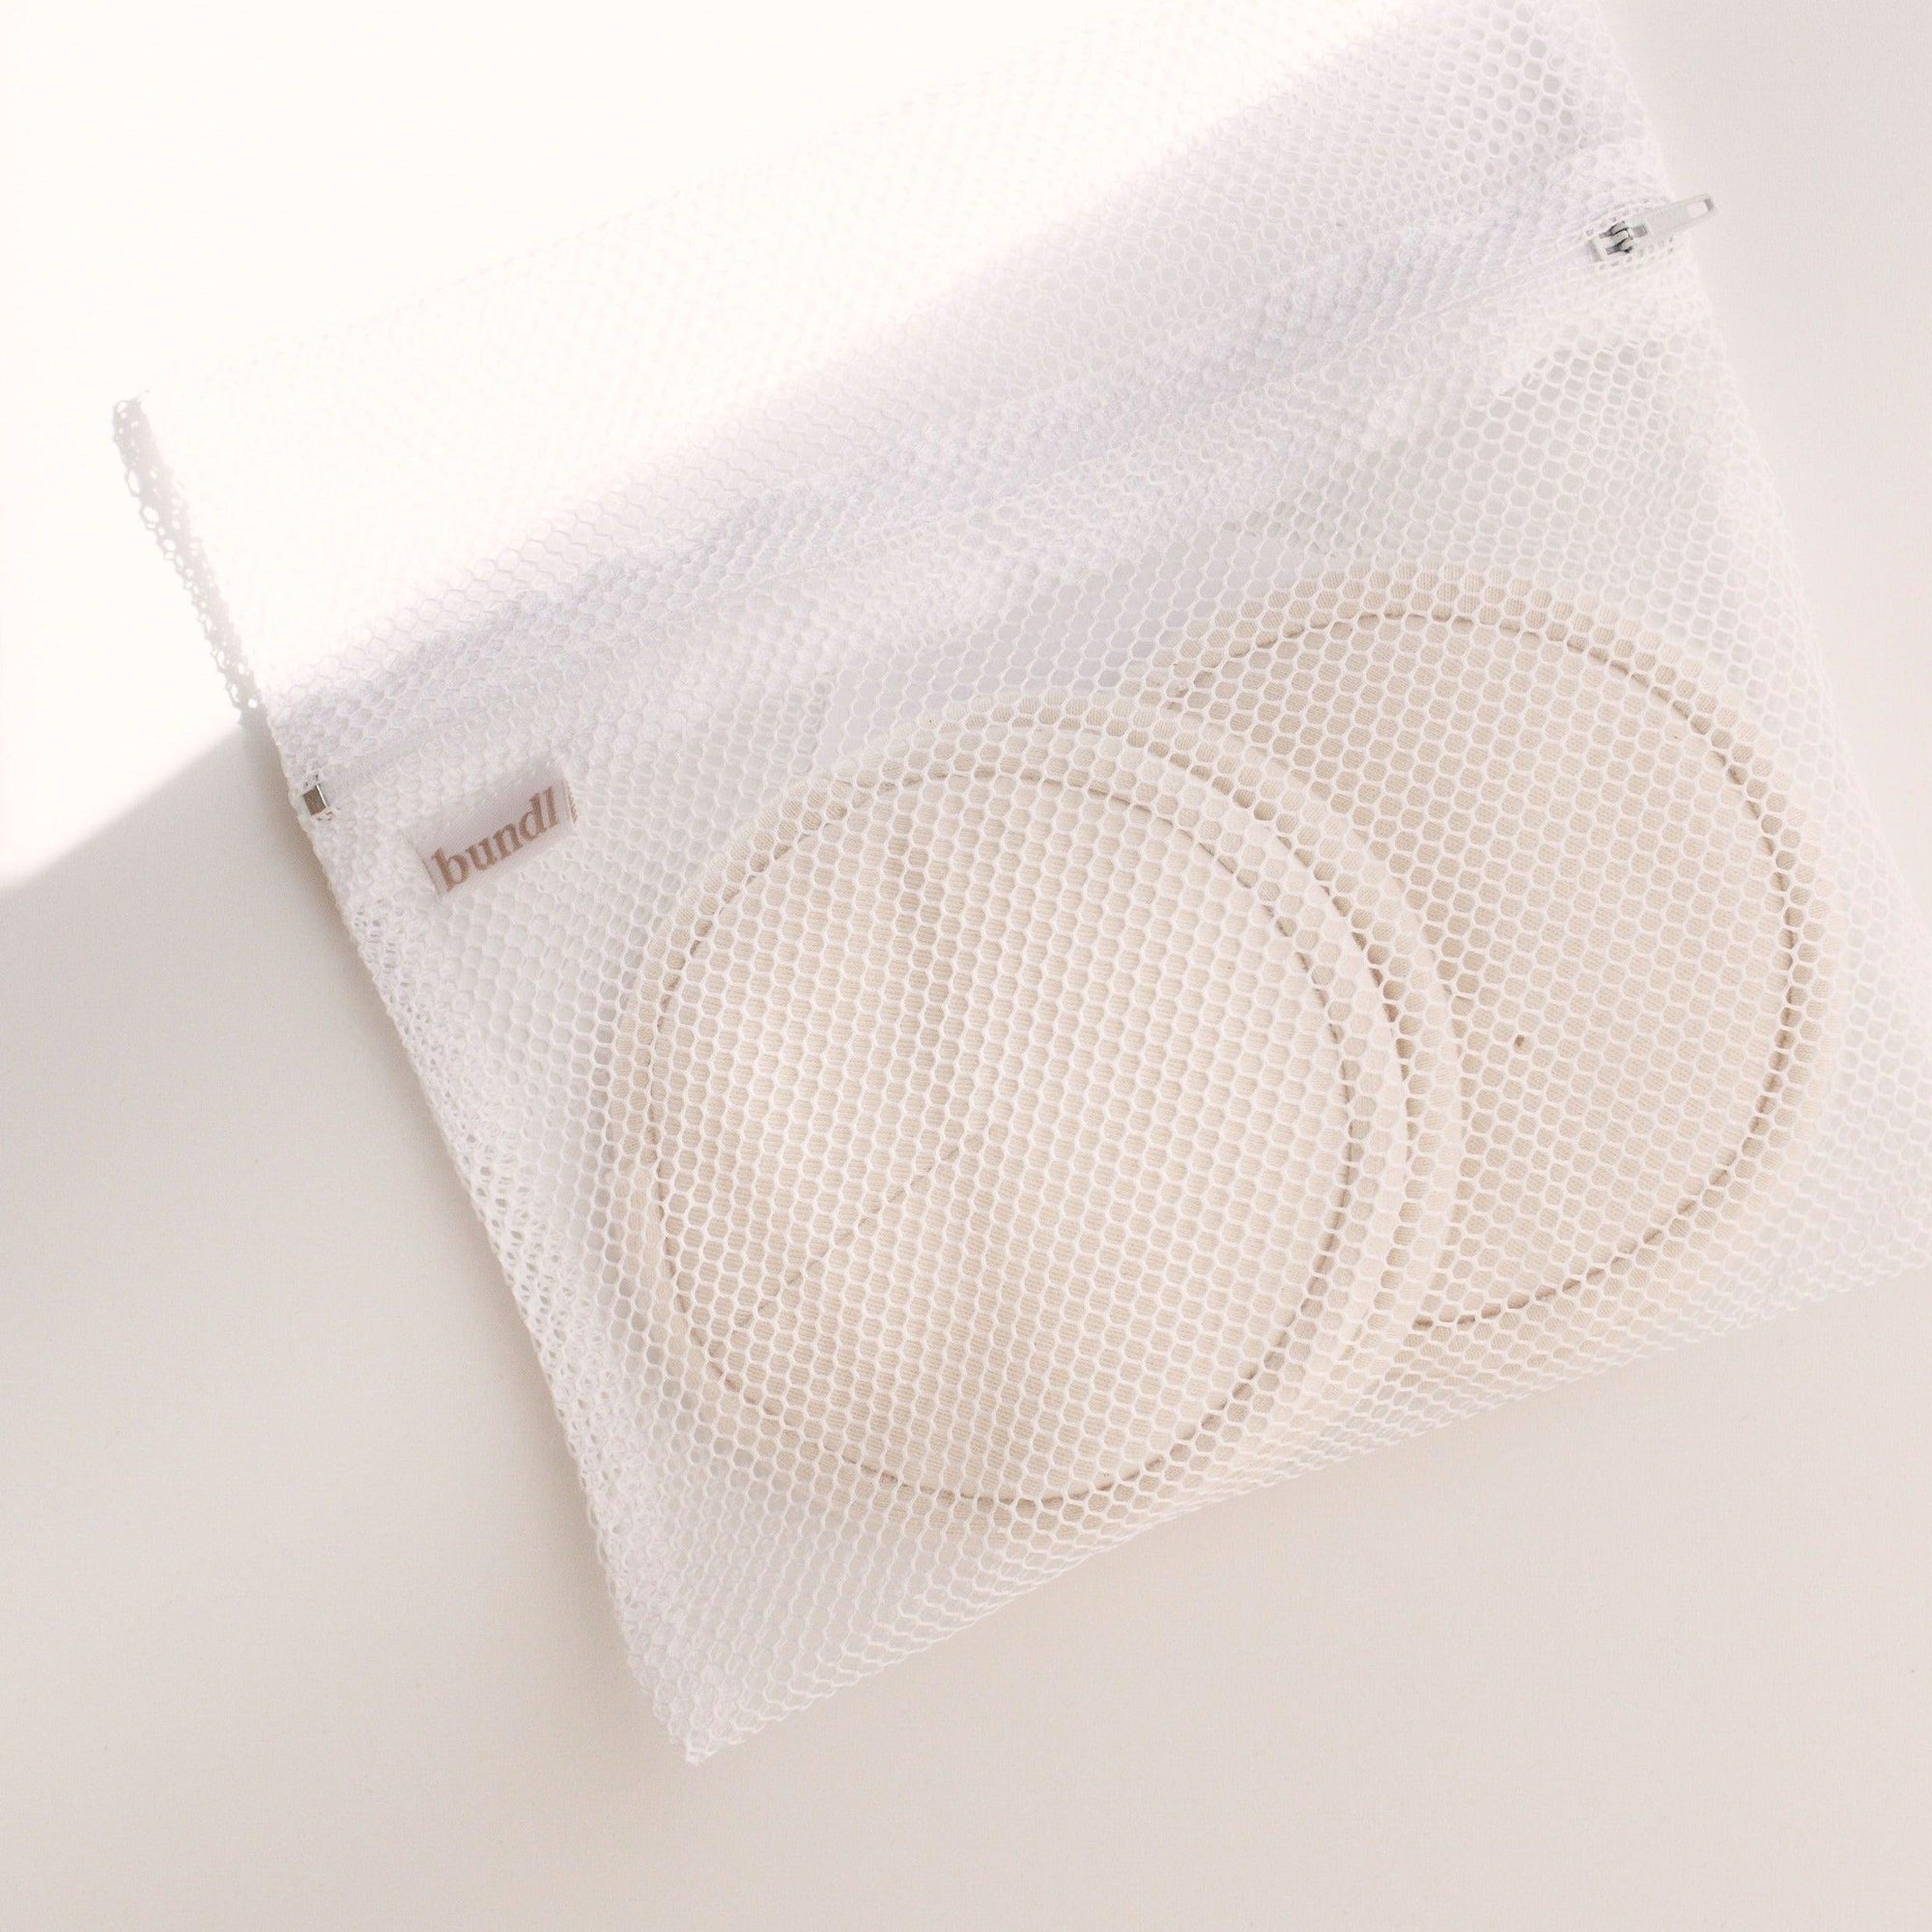 A Bundl. white mesh bag with two Bundl. breast pads.